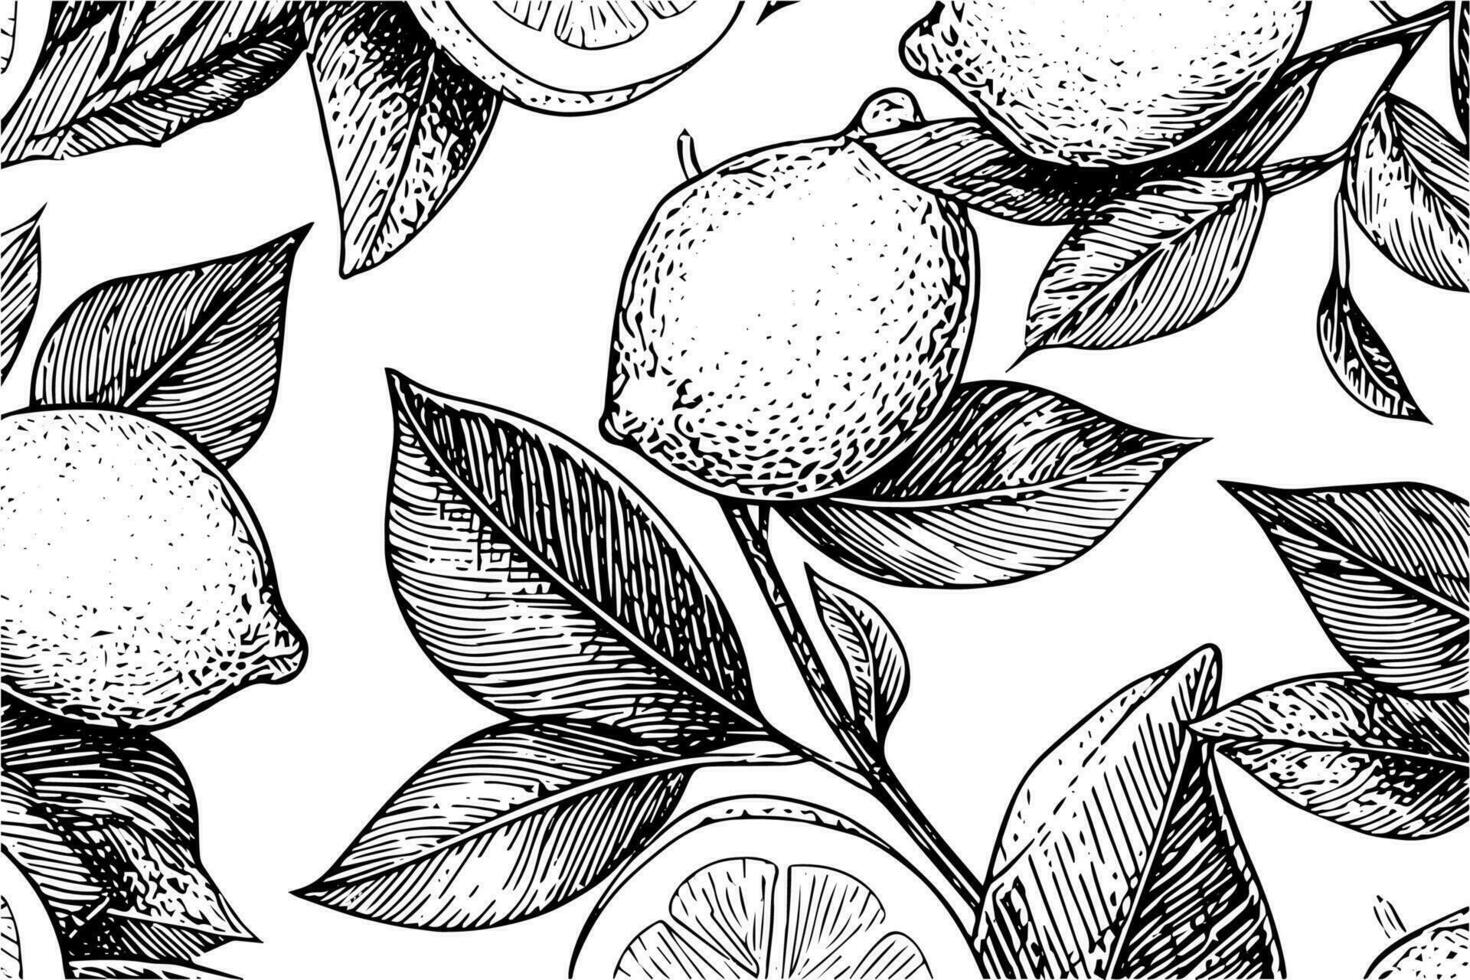 Hand drawn ink sketch vector illustration of lemon. Citrus in engraving style vector illustration.